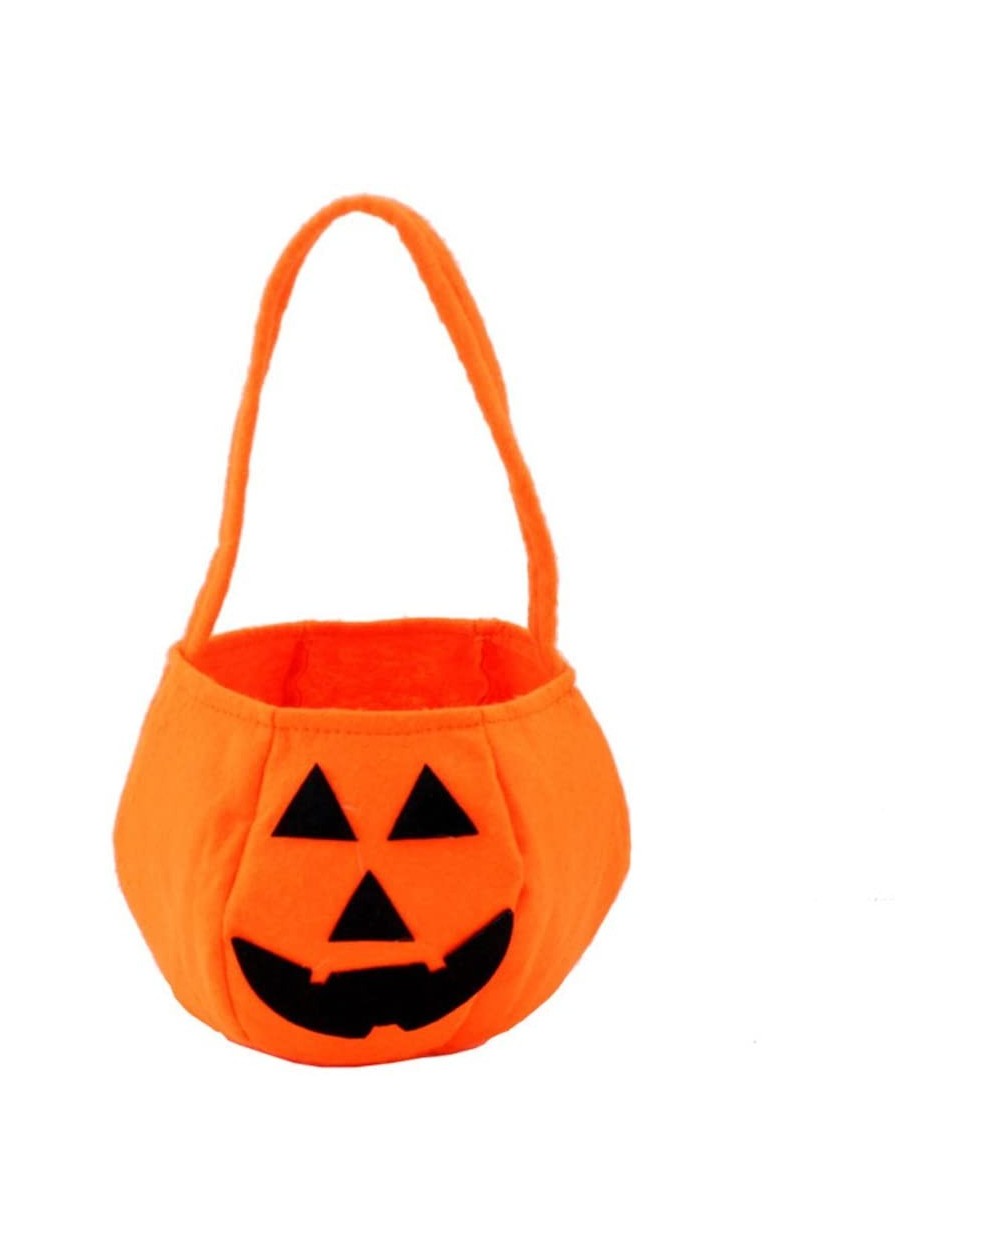 Favors Halloween Bags Pumpkin Candy Holders for Kids Child Play Trick or Treat Snack Basket Bag PTK13 - Pumpkin Bag 2 - CM186...